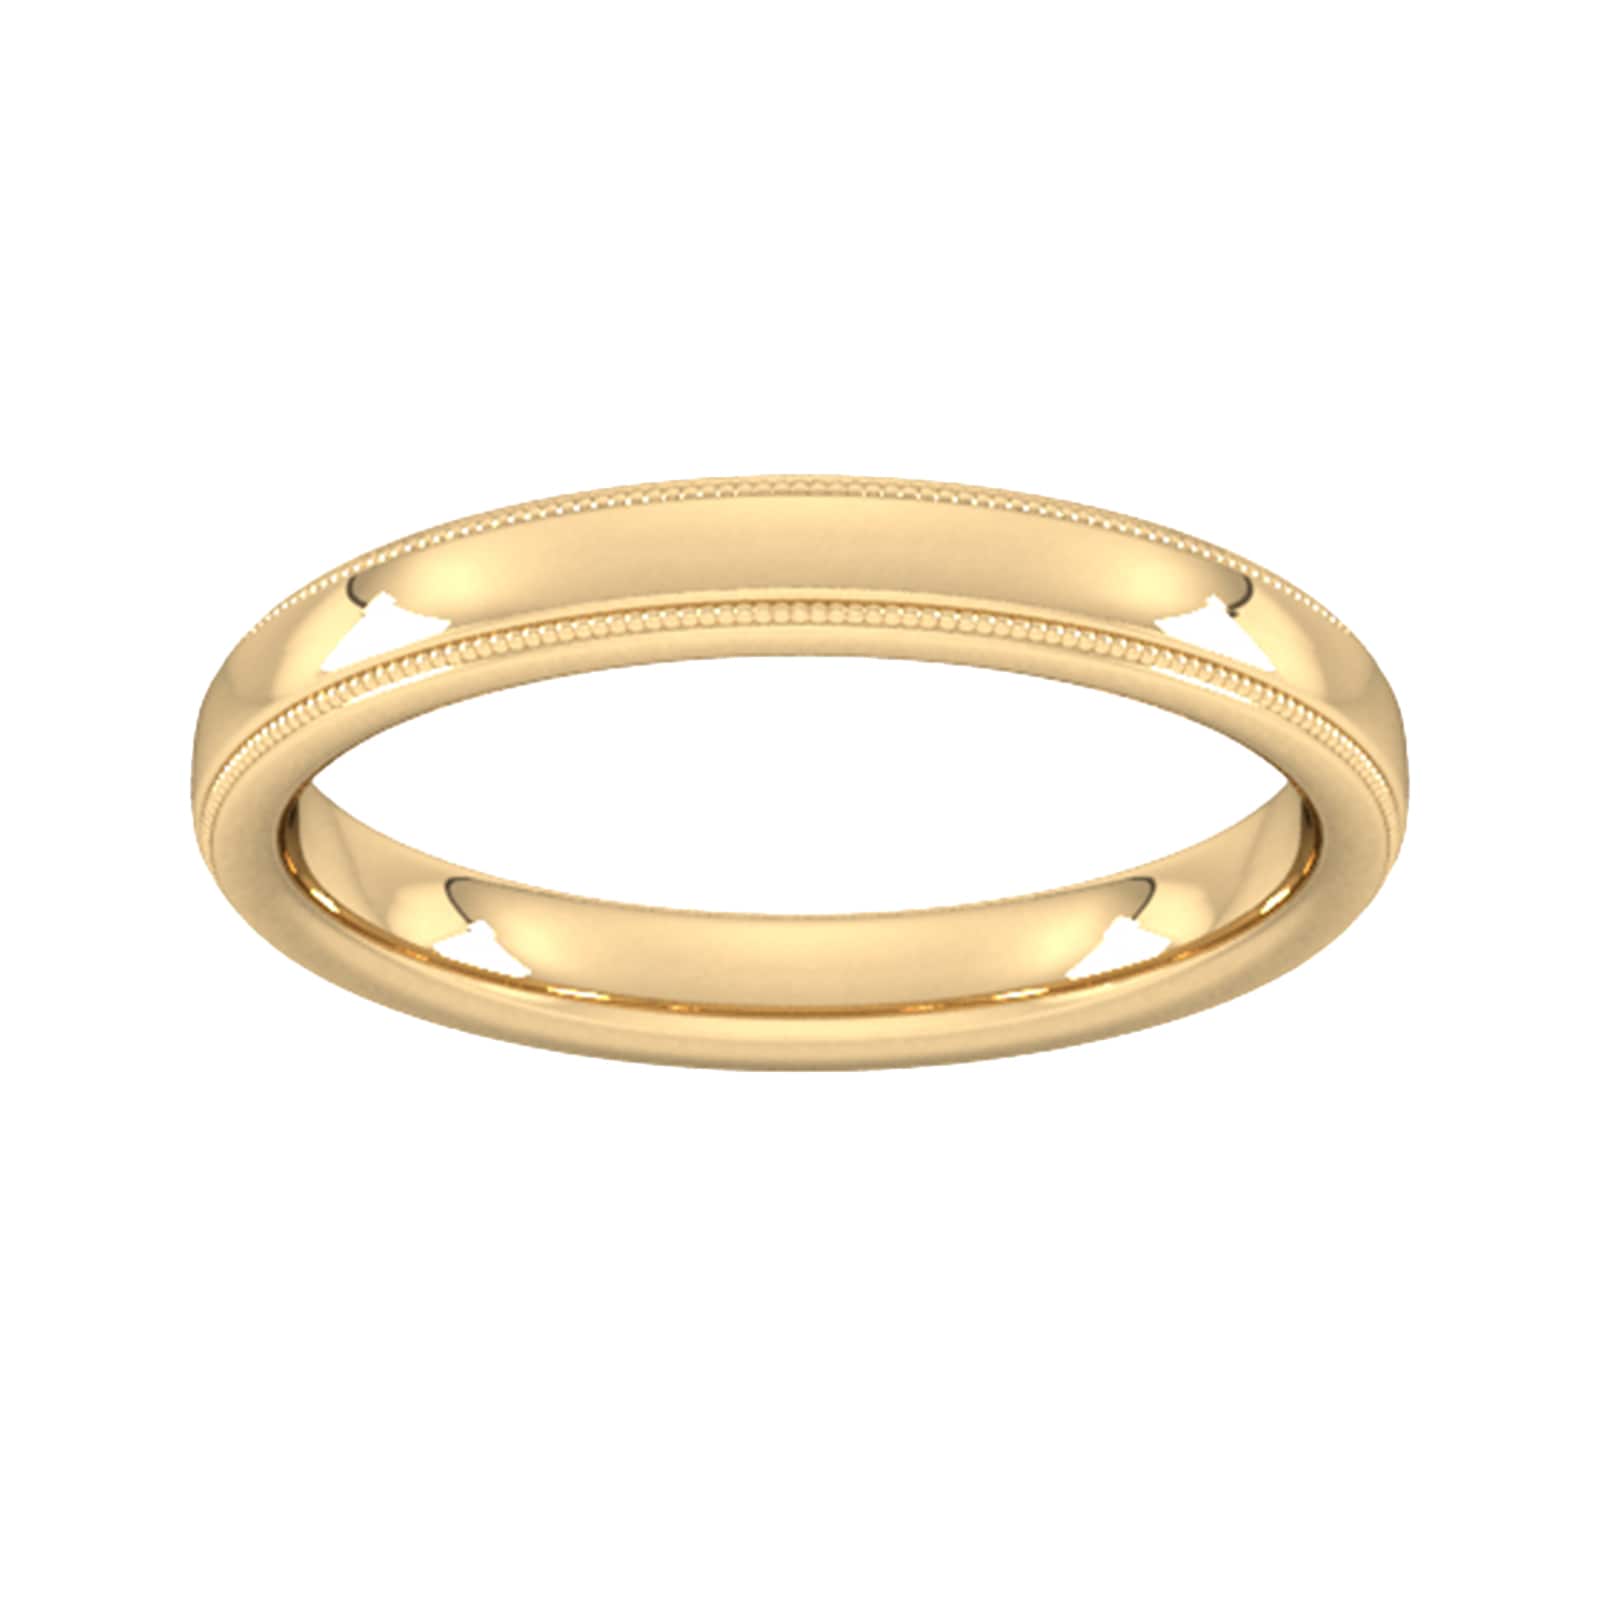 3mm Slight Court Extra Heavy Milgrain Edge Wedding Ring In 9 Carat Yellow Gold - Ring Size N